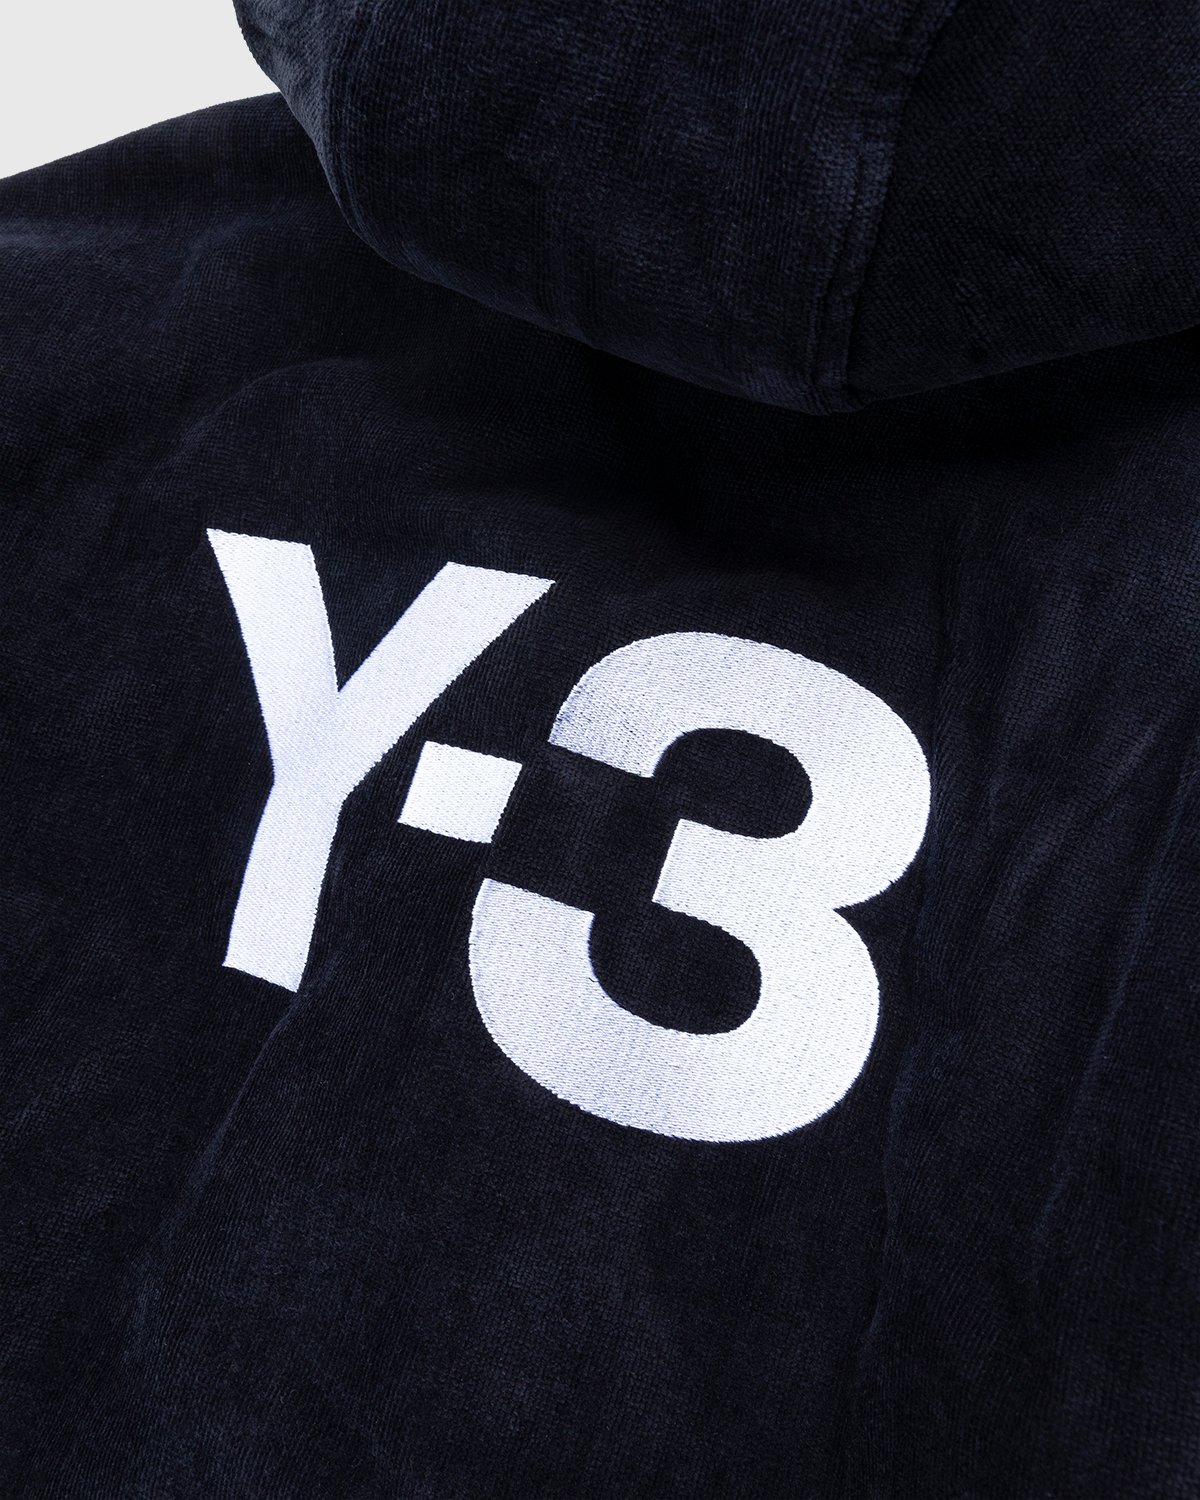 Y-3 - Cotton Bathrobe Black - Lifestyle - Black - Image 3